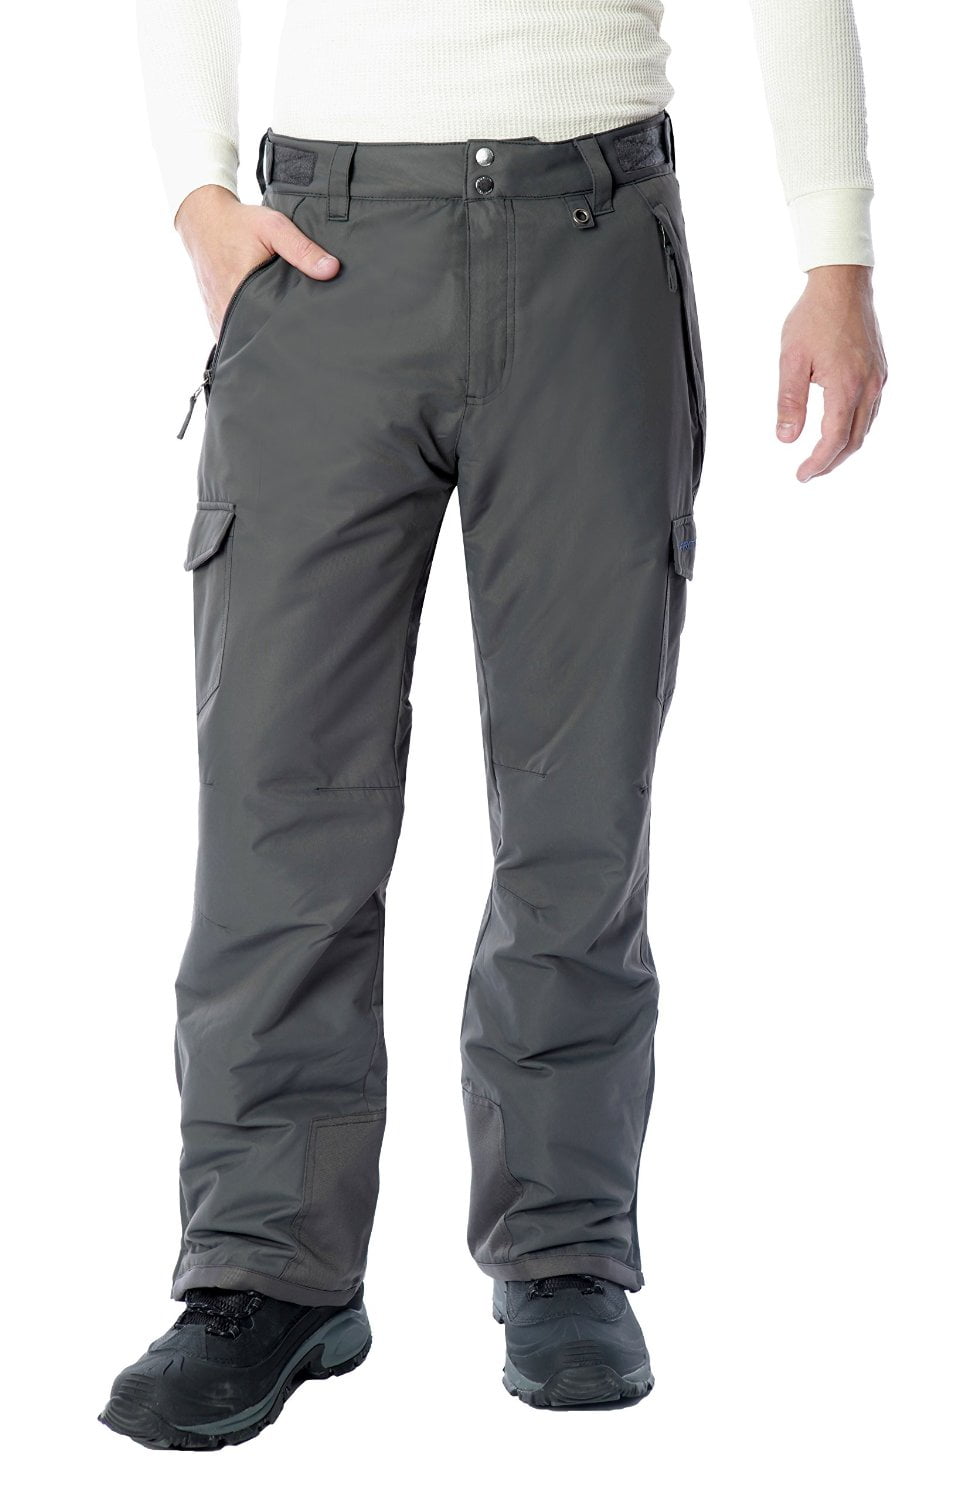 NWOT Arctix Men's Snow Sports Cargo Pants,Ski Pant Snowboard Black M Medium 